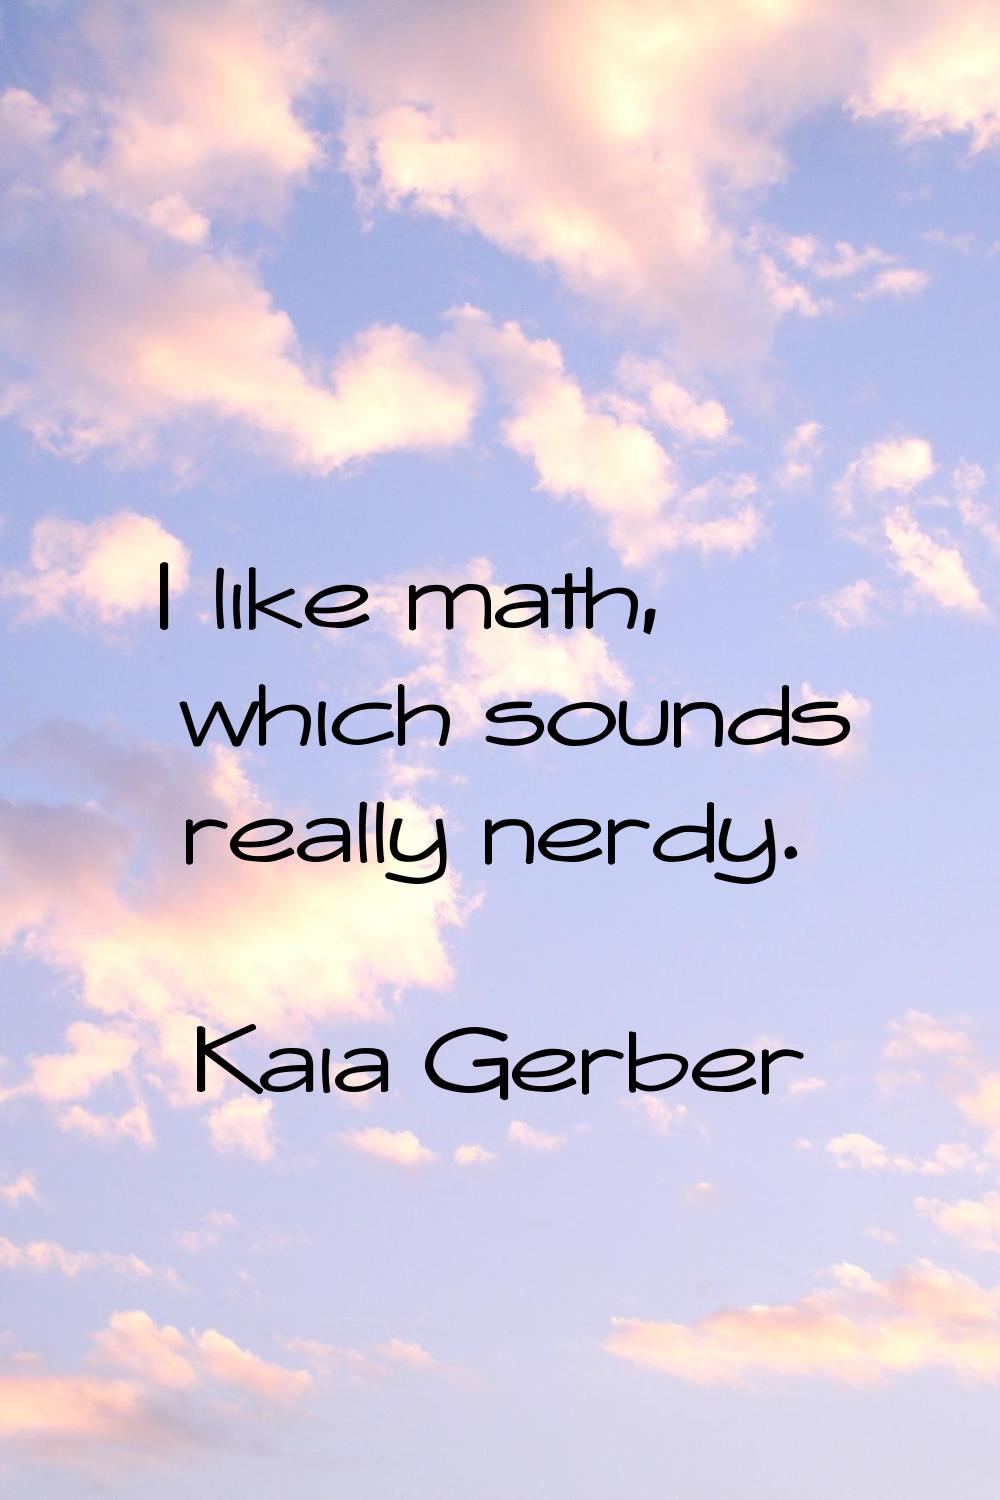 I like math, which sounds really nerdy.